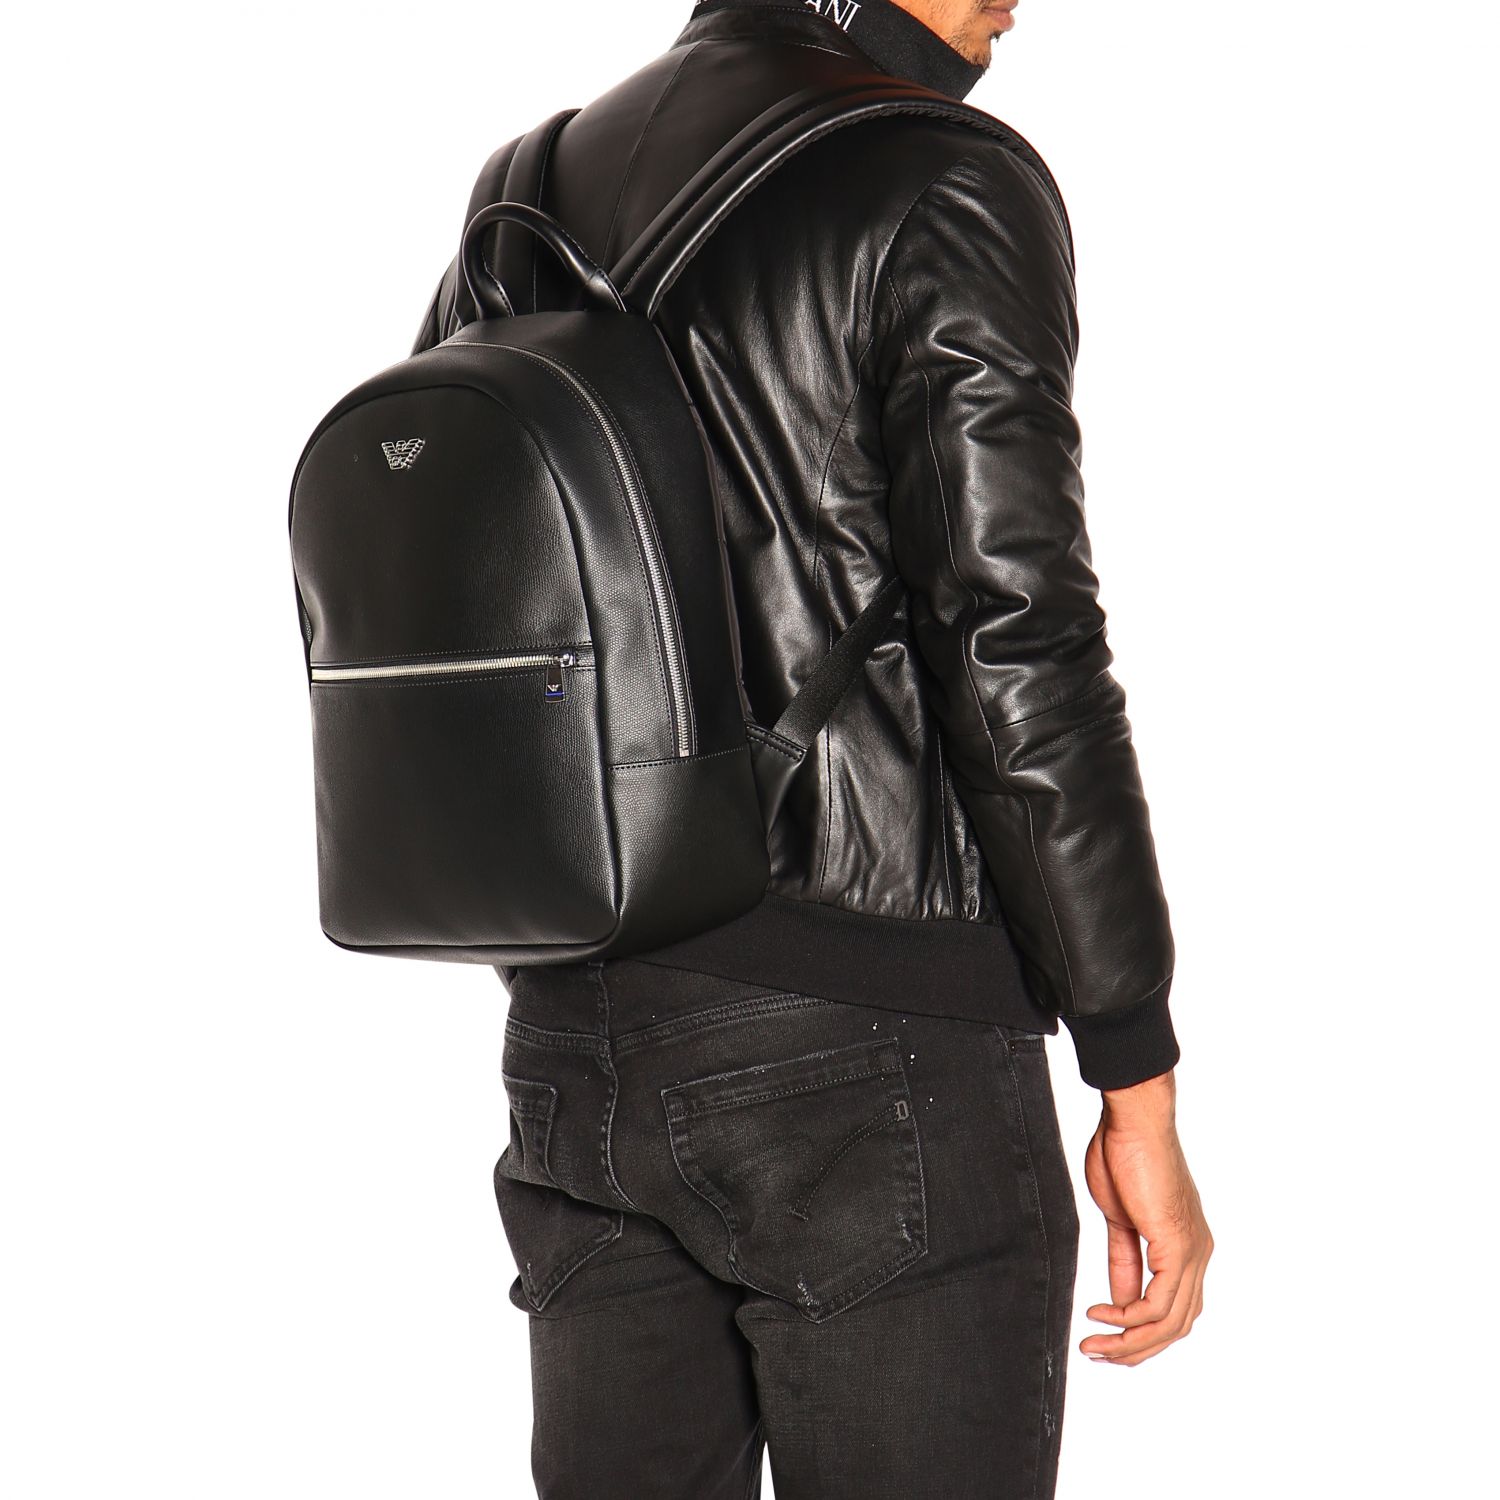 Emporio Armani Outlet: Backpack men | Backpack Emporio Armani Men Black